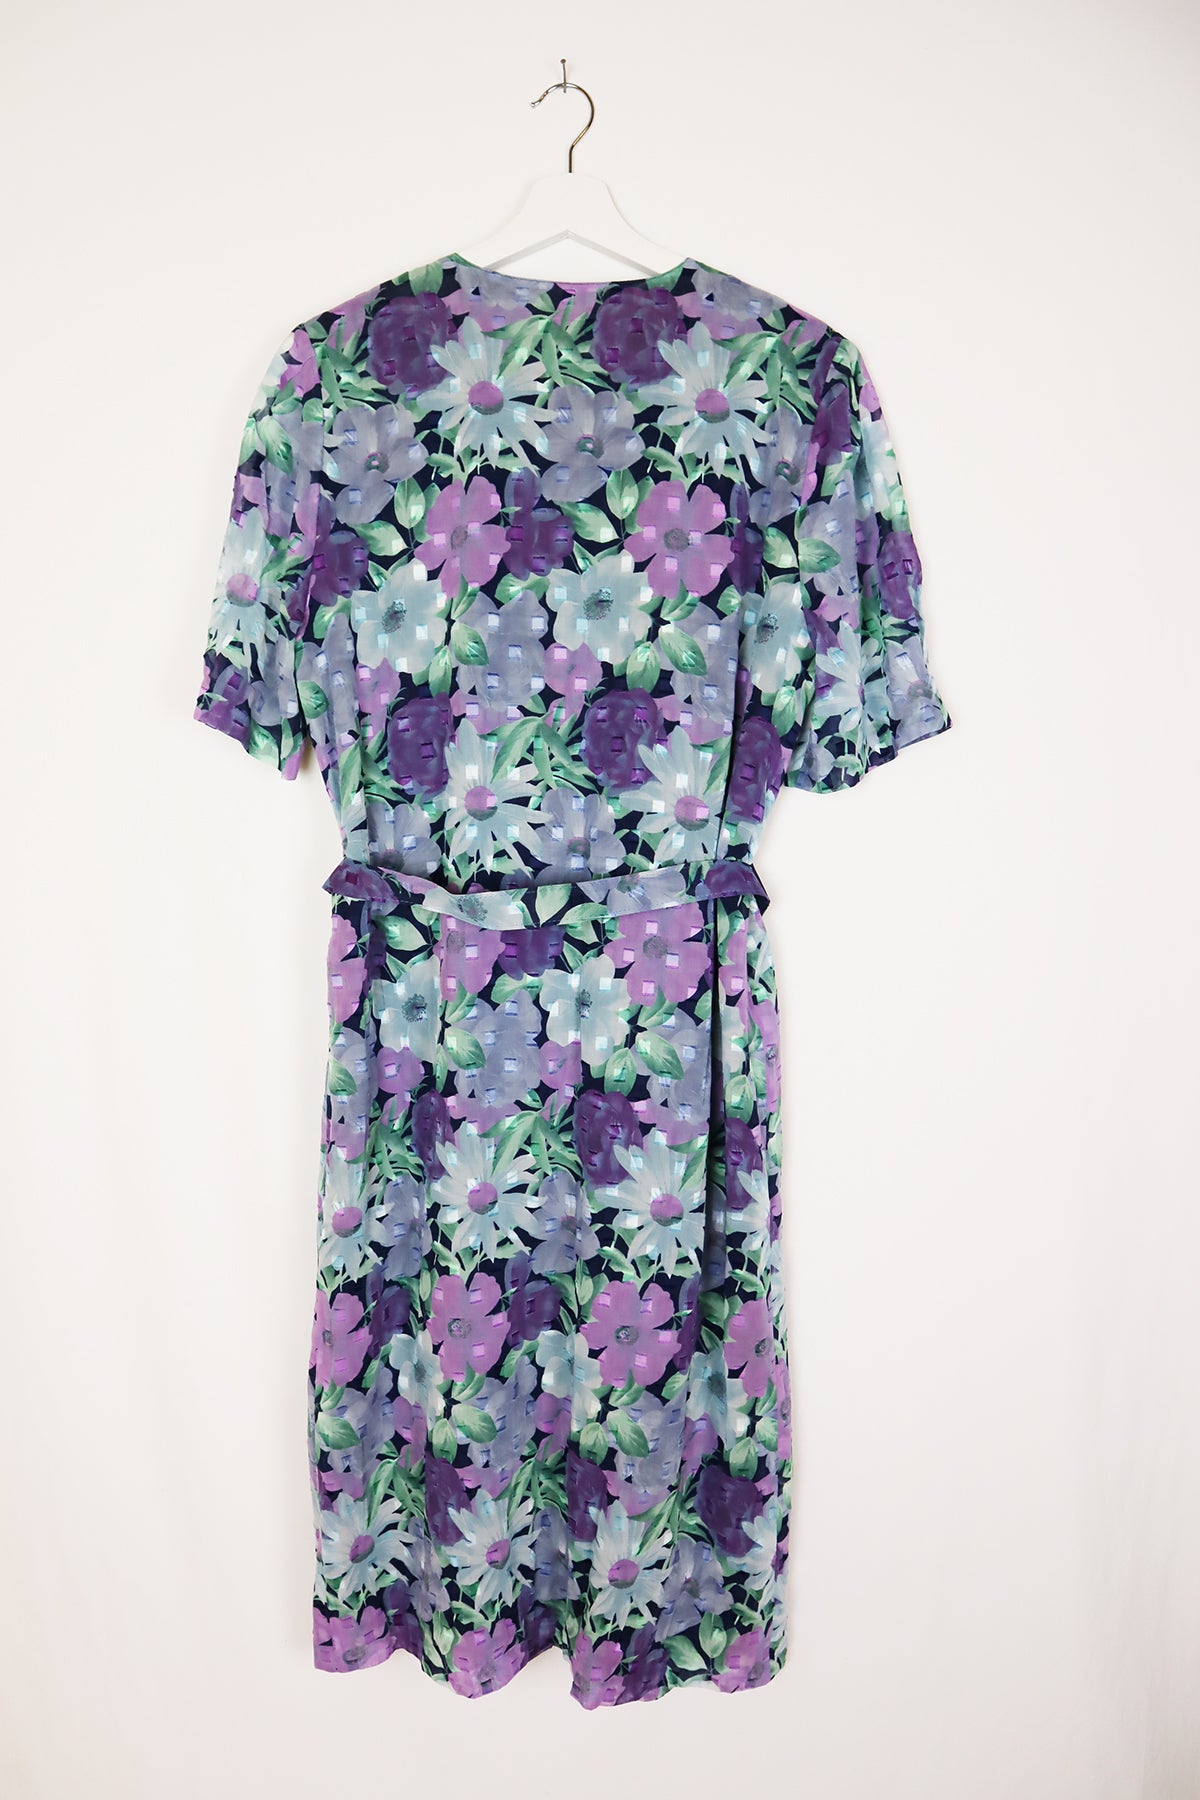 Kleid Vintage Blumenwiese Lila ( Gr. M/L )